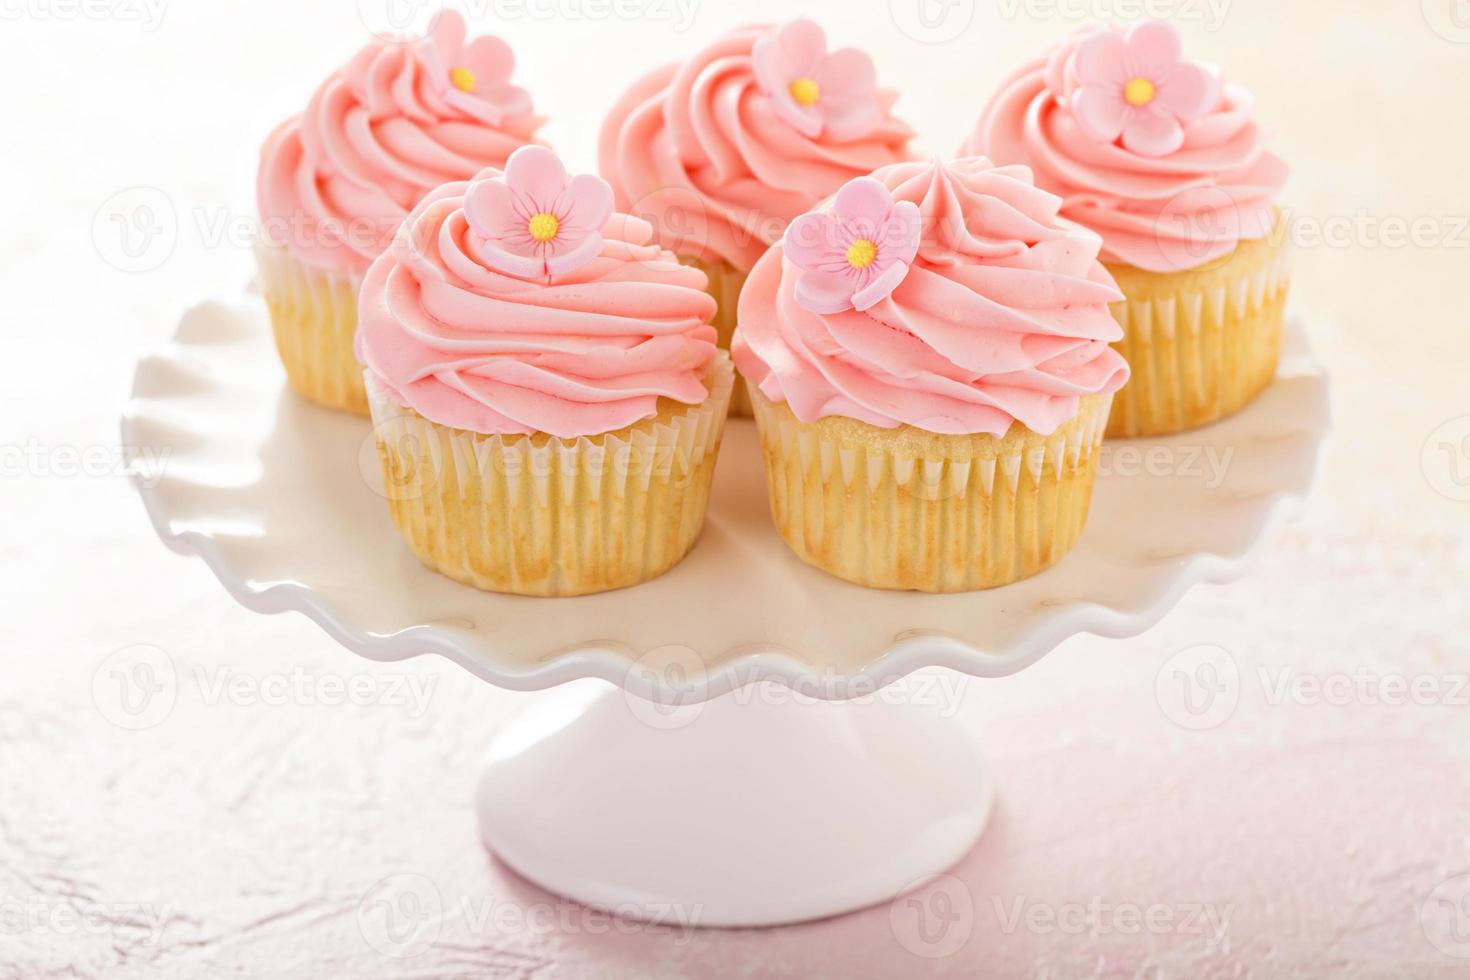 vanille cupcakes met roze framboos glimmertjes foto